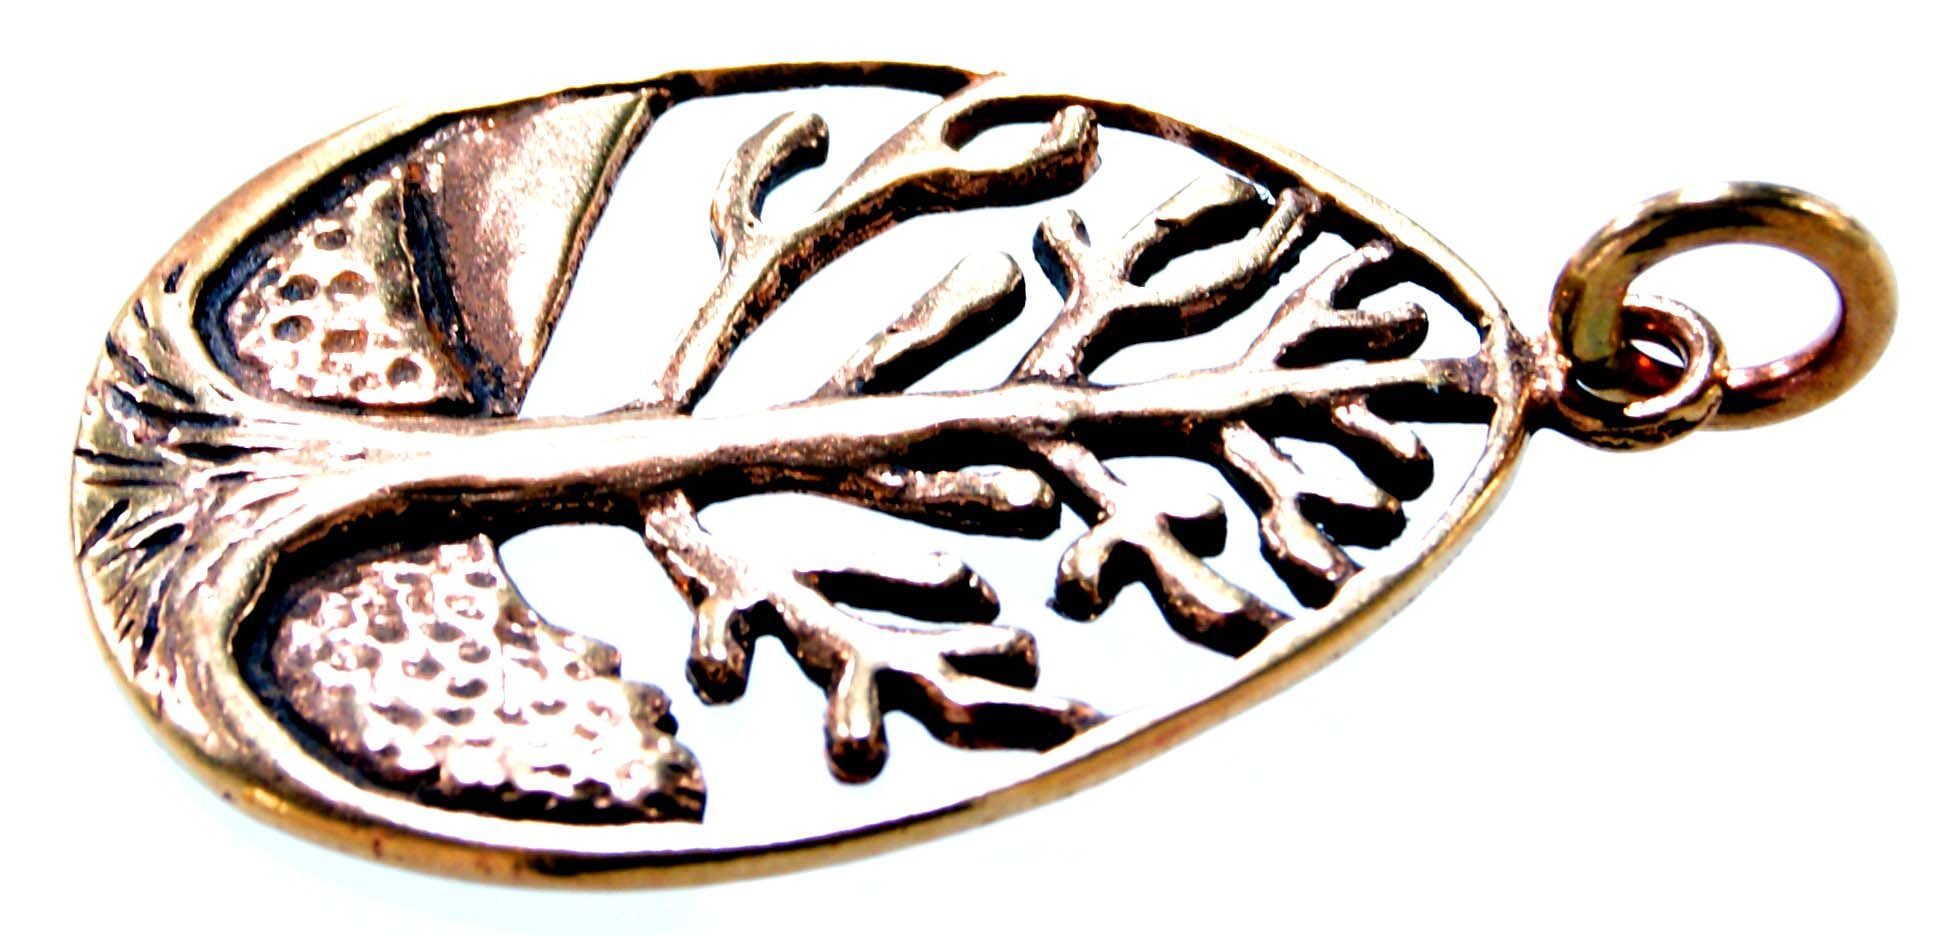 Kettenanhänger Bronze Yggdrasil Kiss Lebensbaum Baum Anhänger Lebens Leather Life of of Tree